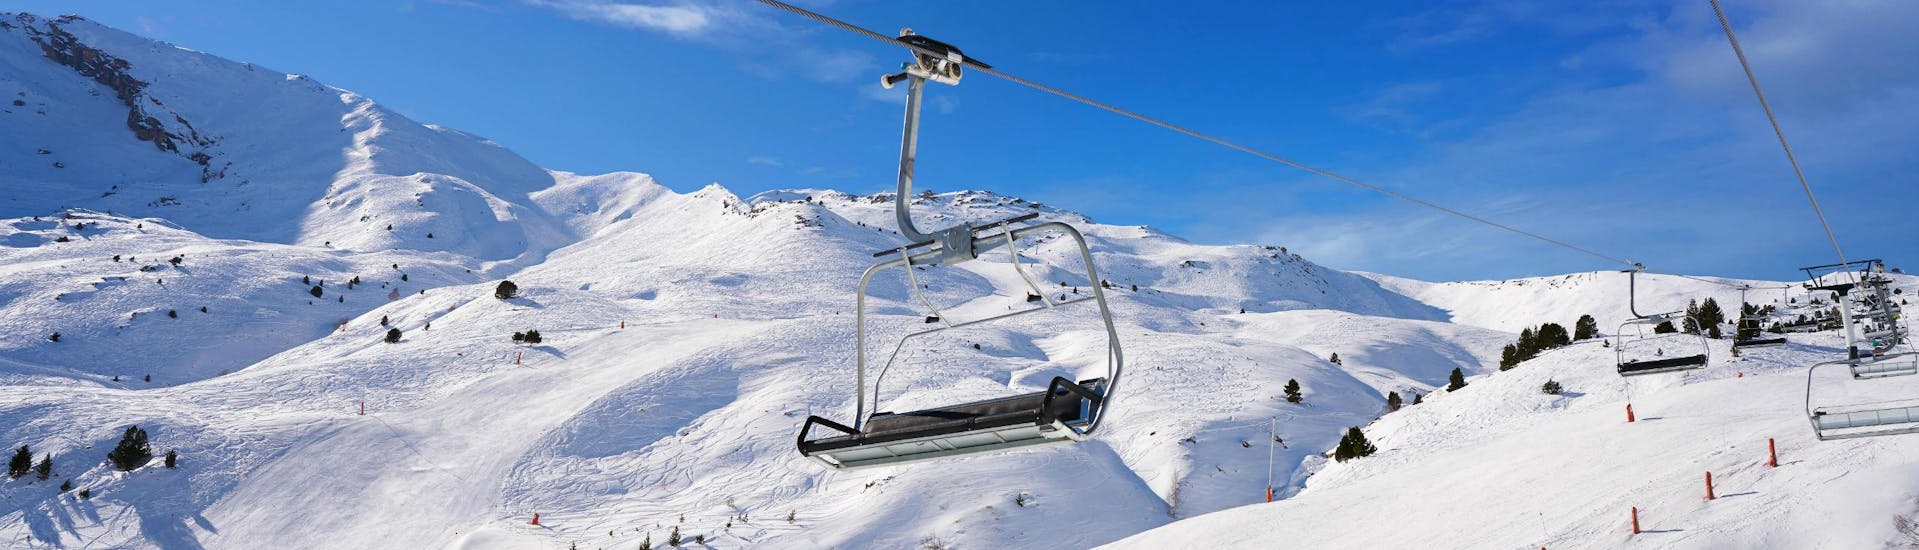 View of the ski resort of Cerler in the Spanish Pyrenees where many ski school offer ski lessons. 